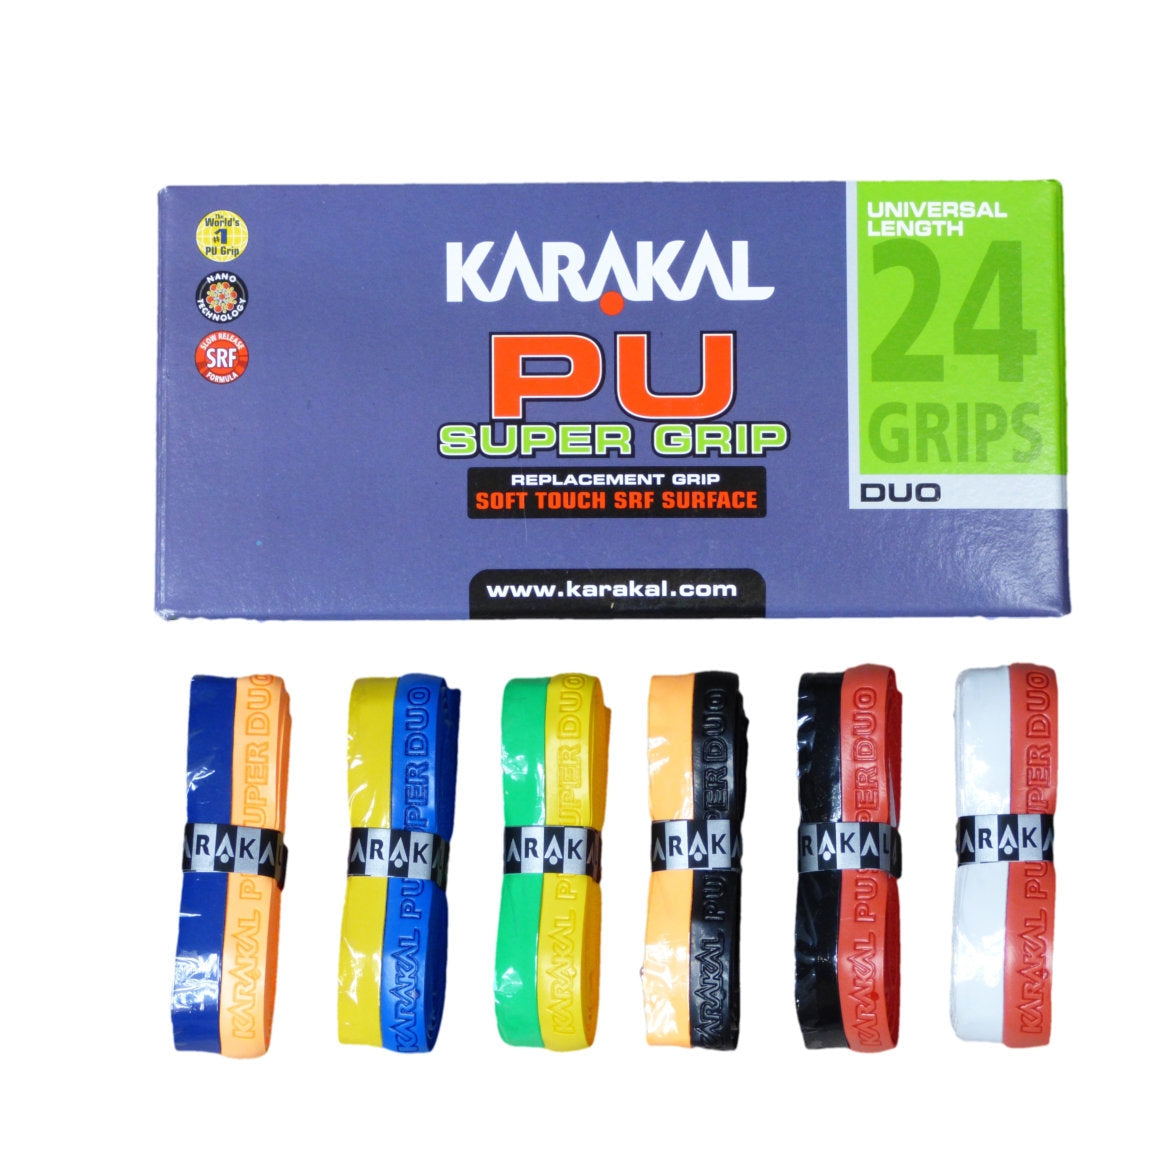 Karakal Supergrip Box 24 Duo